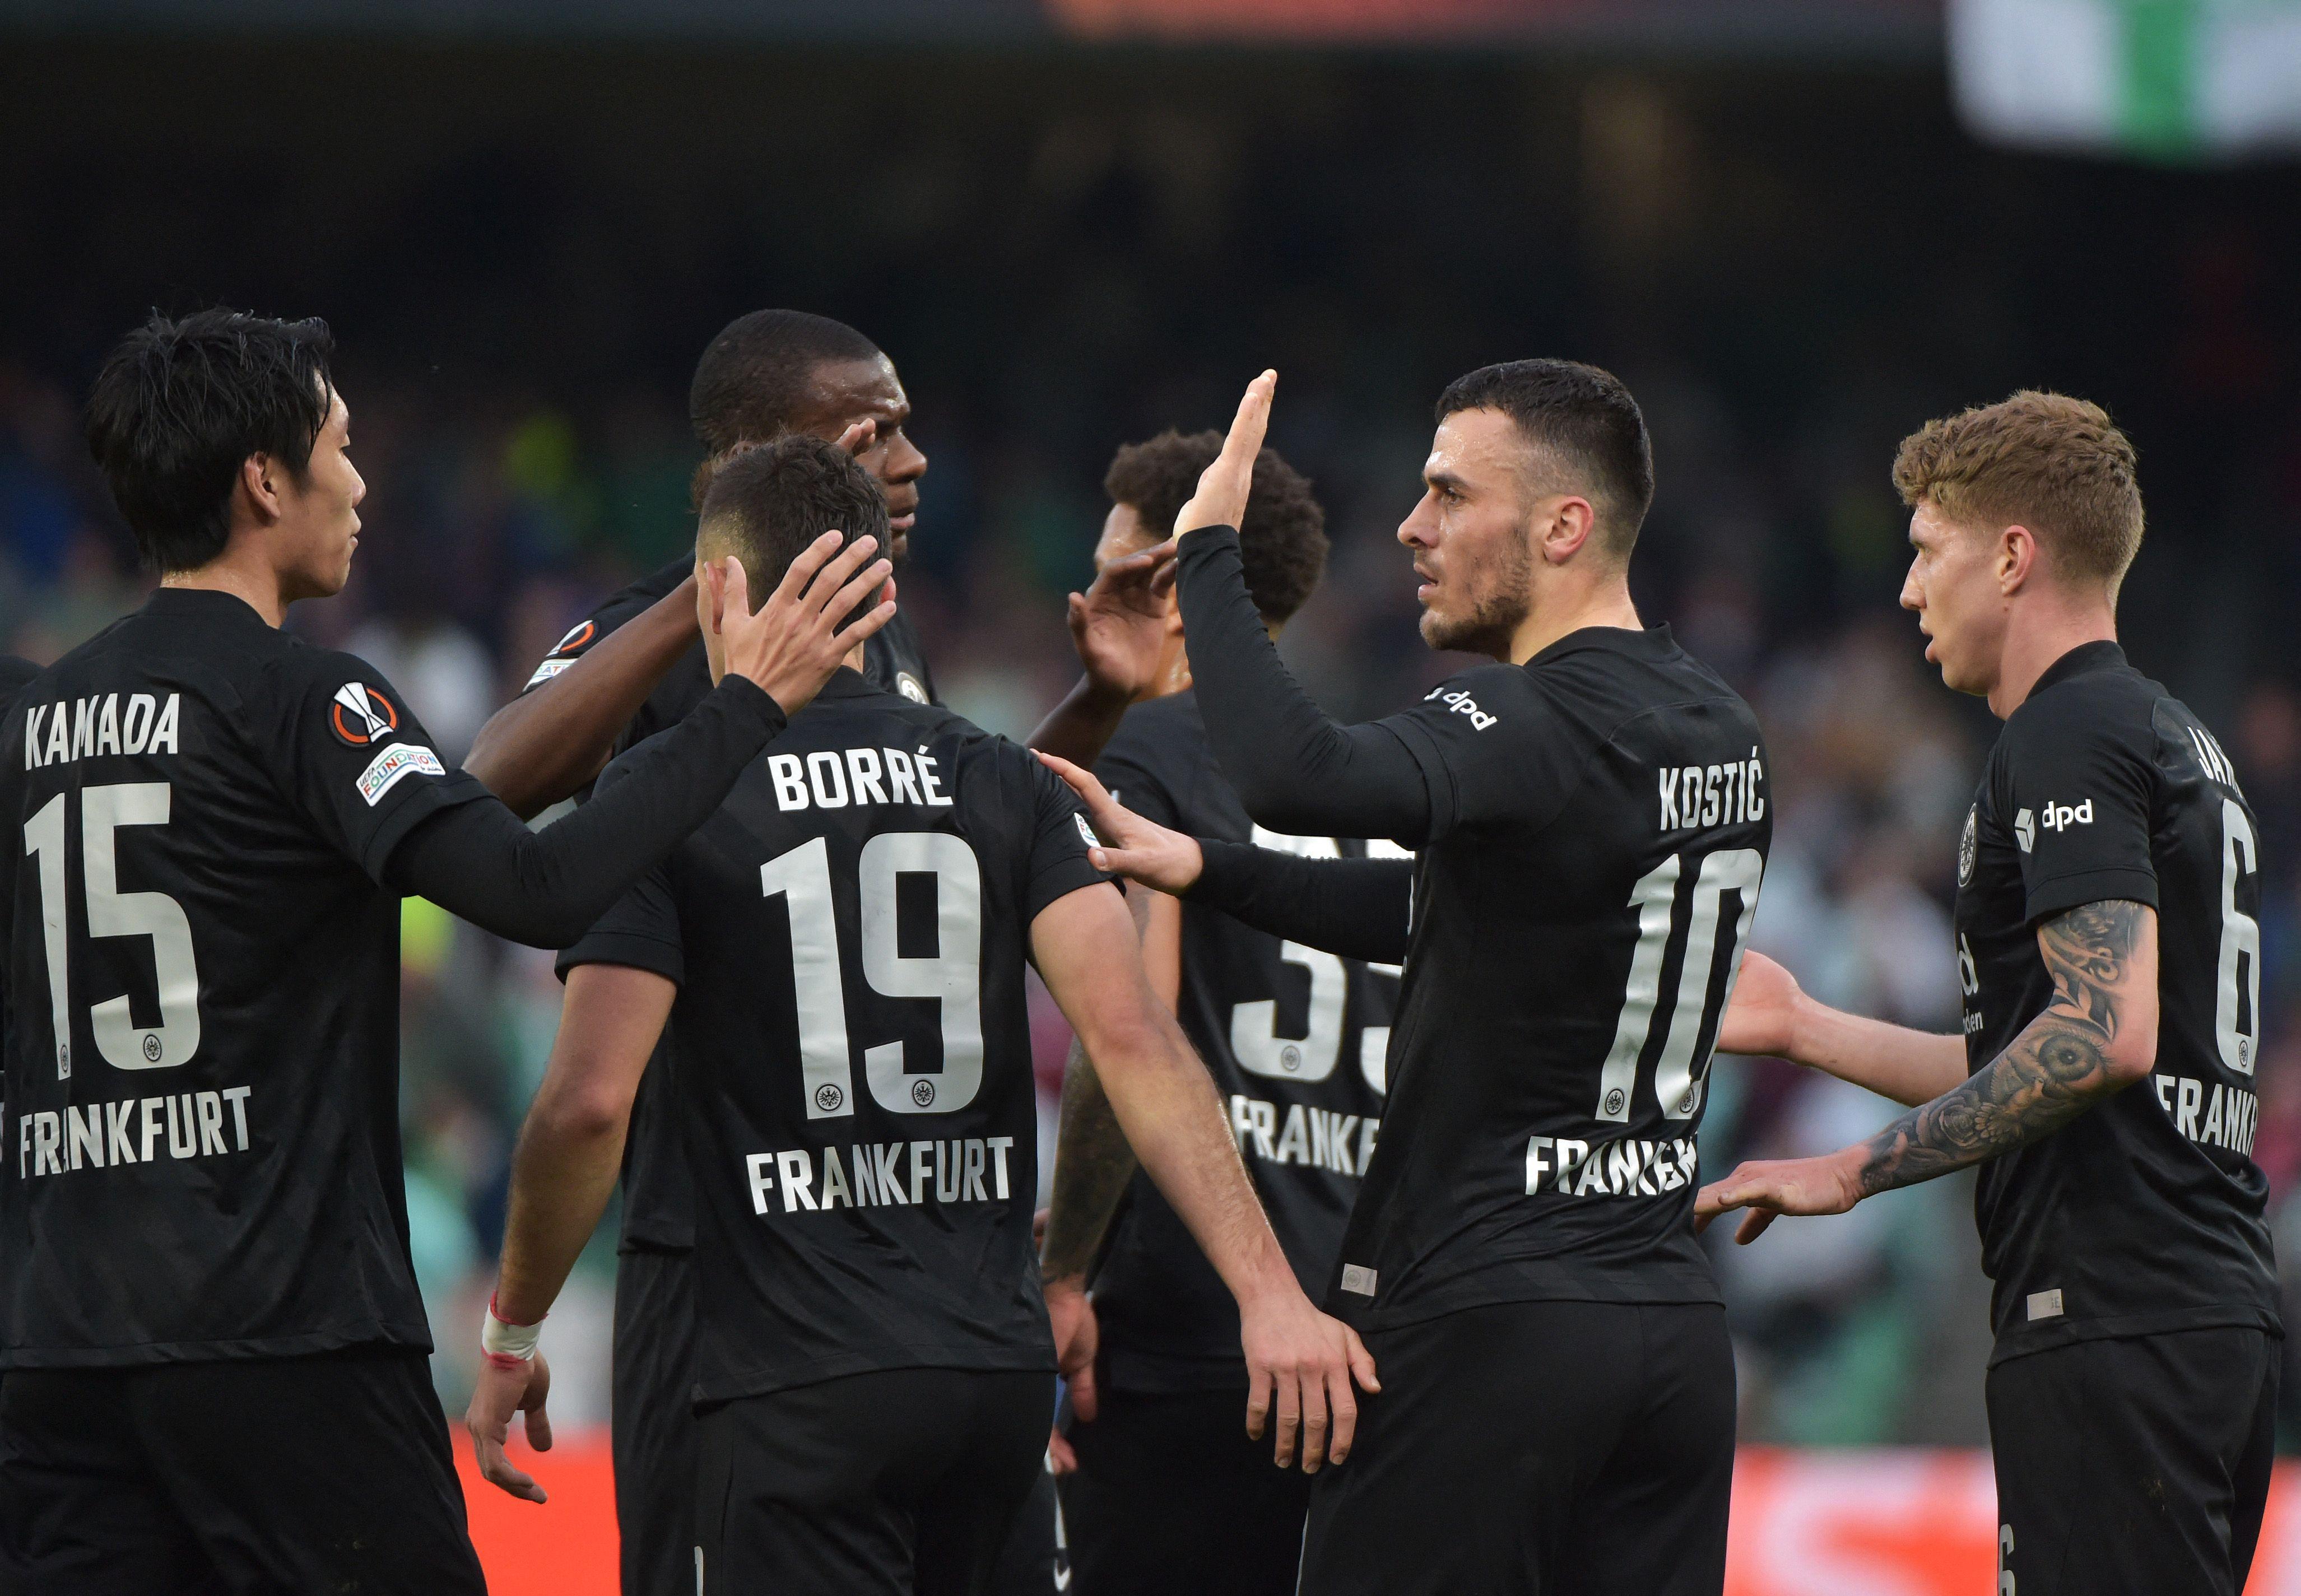 (ÖZET) Real Betis-Eintracht Frankfurt maç sonucu: 1-2